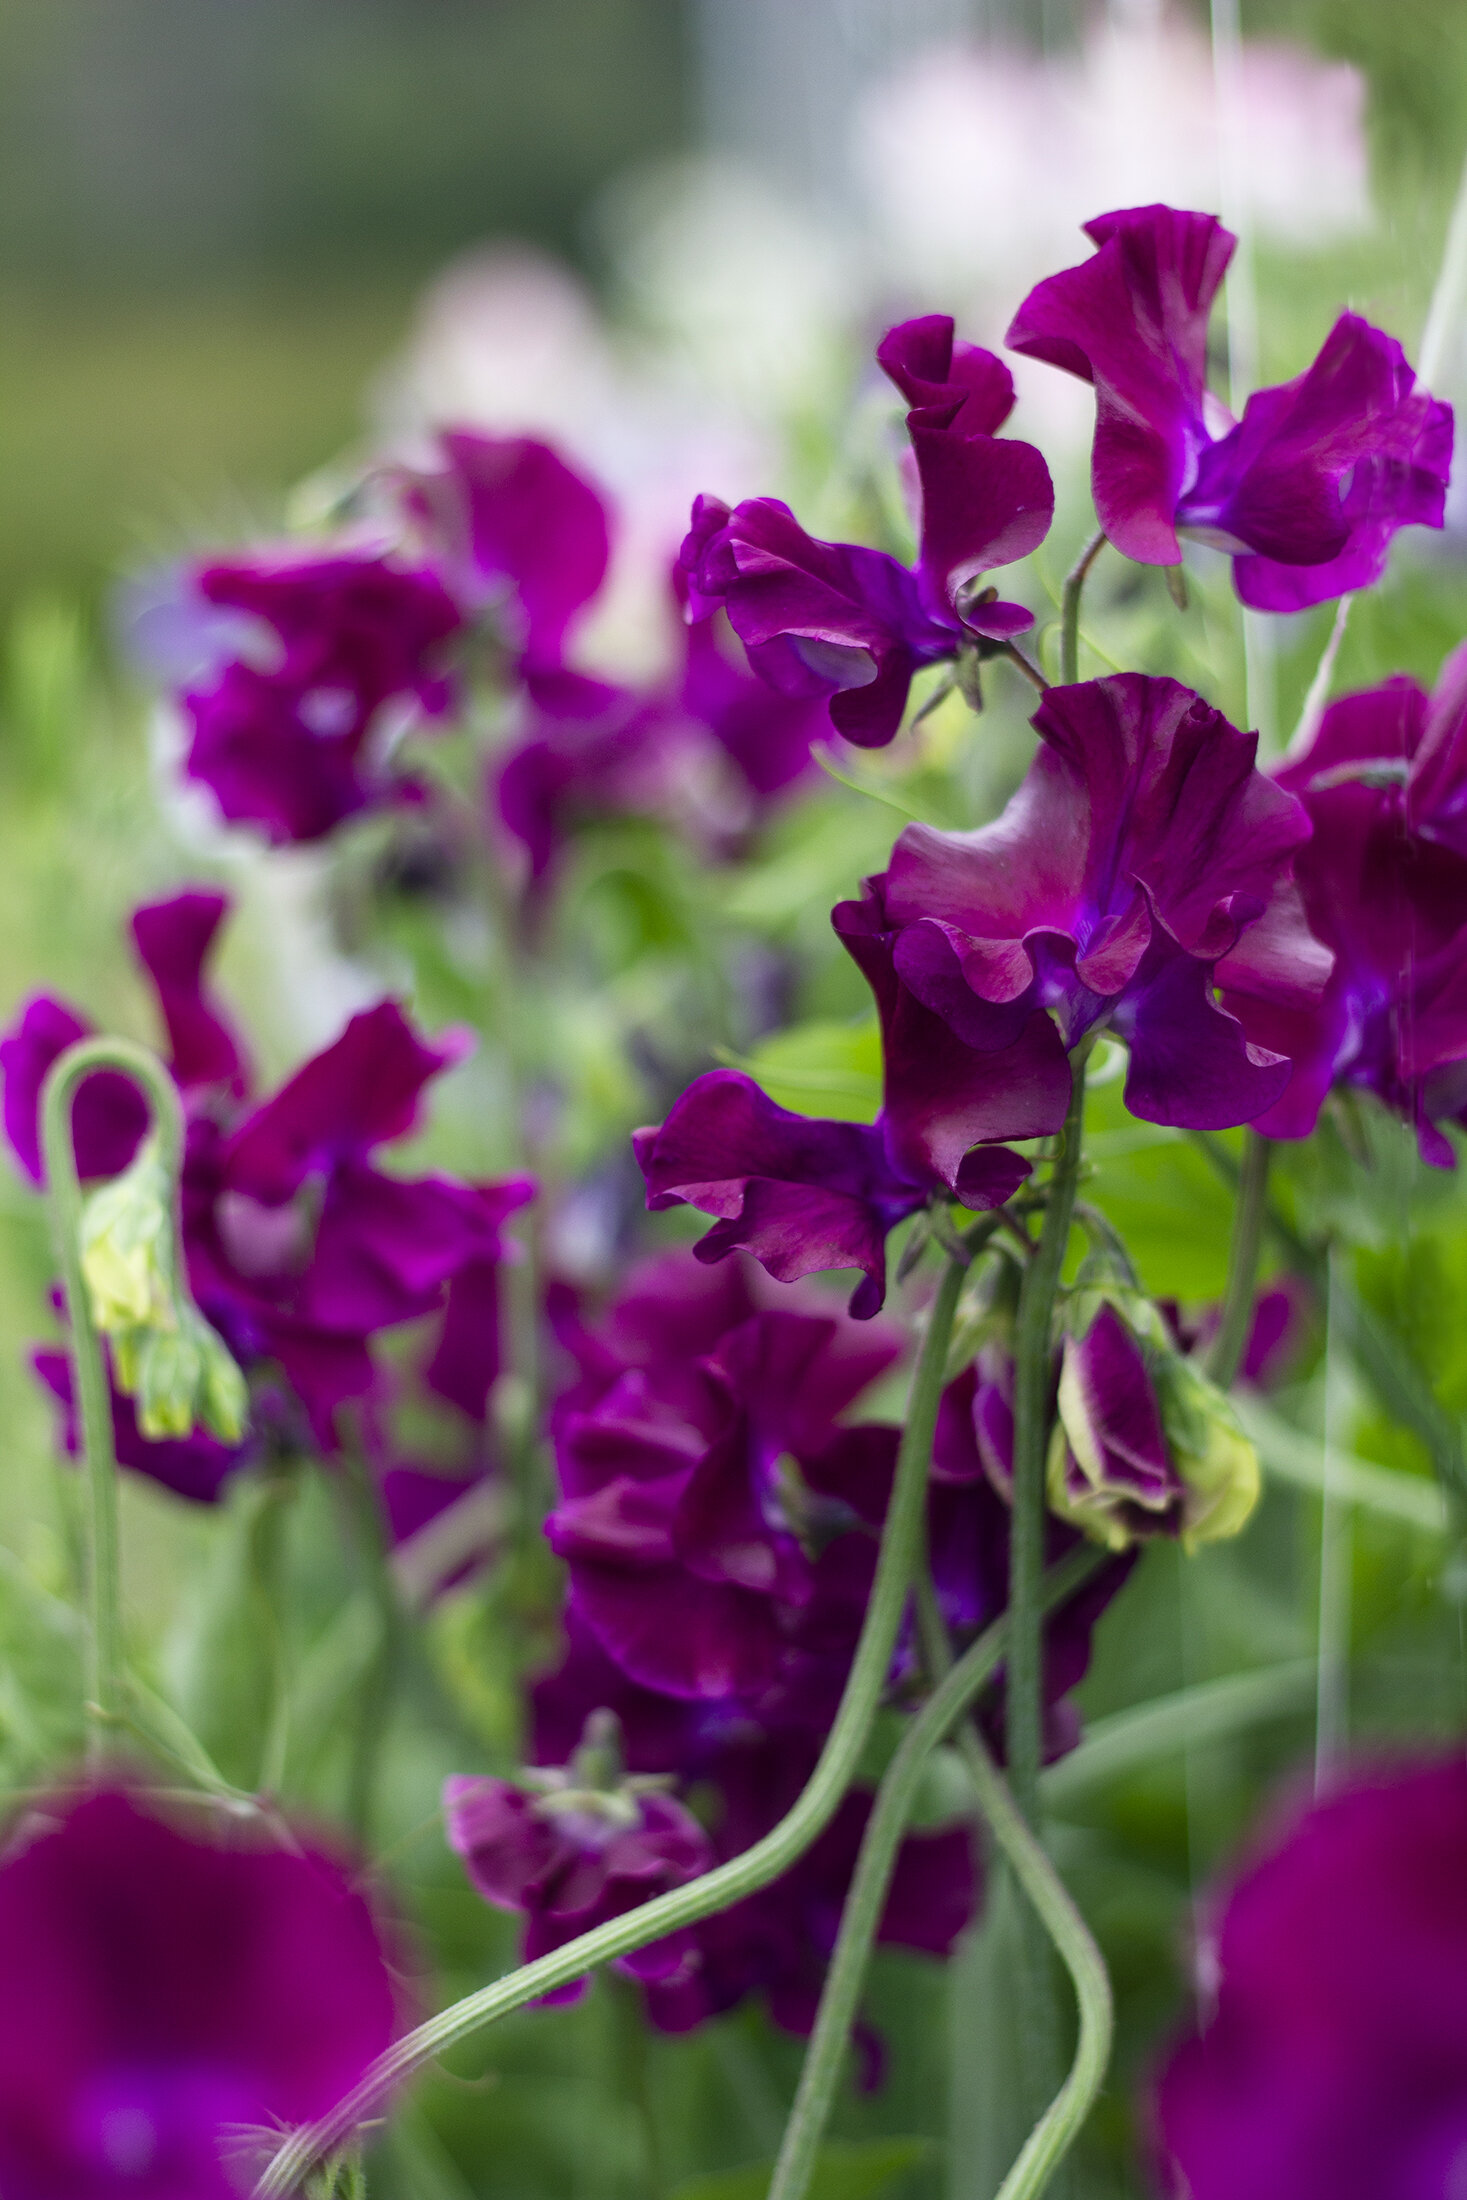 reduced_ss_sweet_peas_violet_purple_trellis_field_spring.jpg